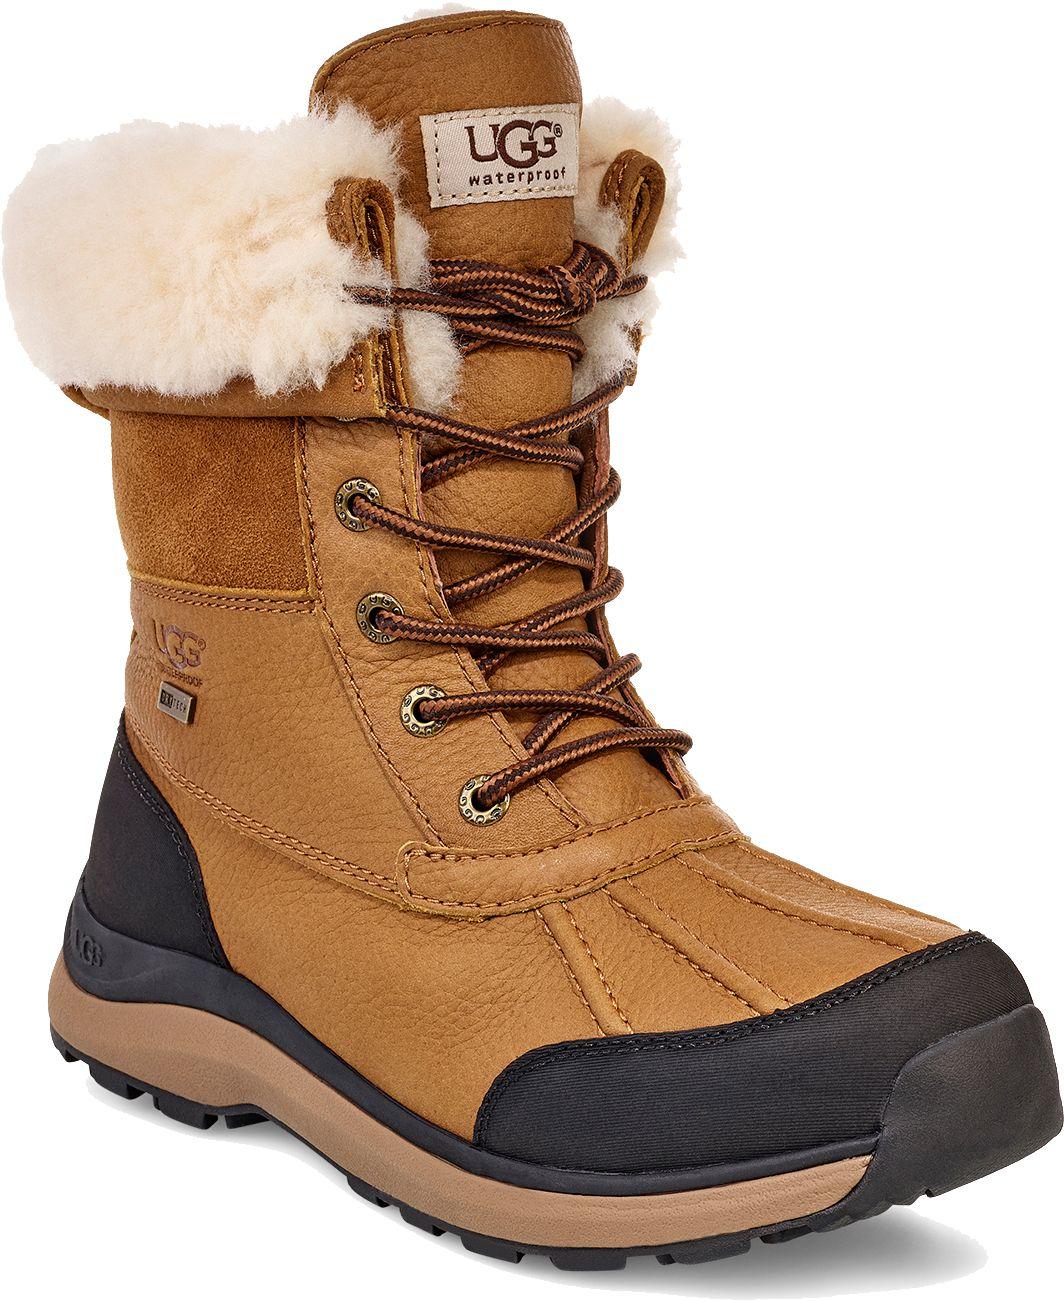 UGG Wool Adirondack Iii 200g Waterproof Winter Boots in Chestnut Leather  (Brown) - Lyst